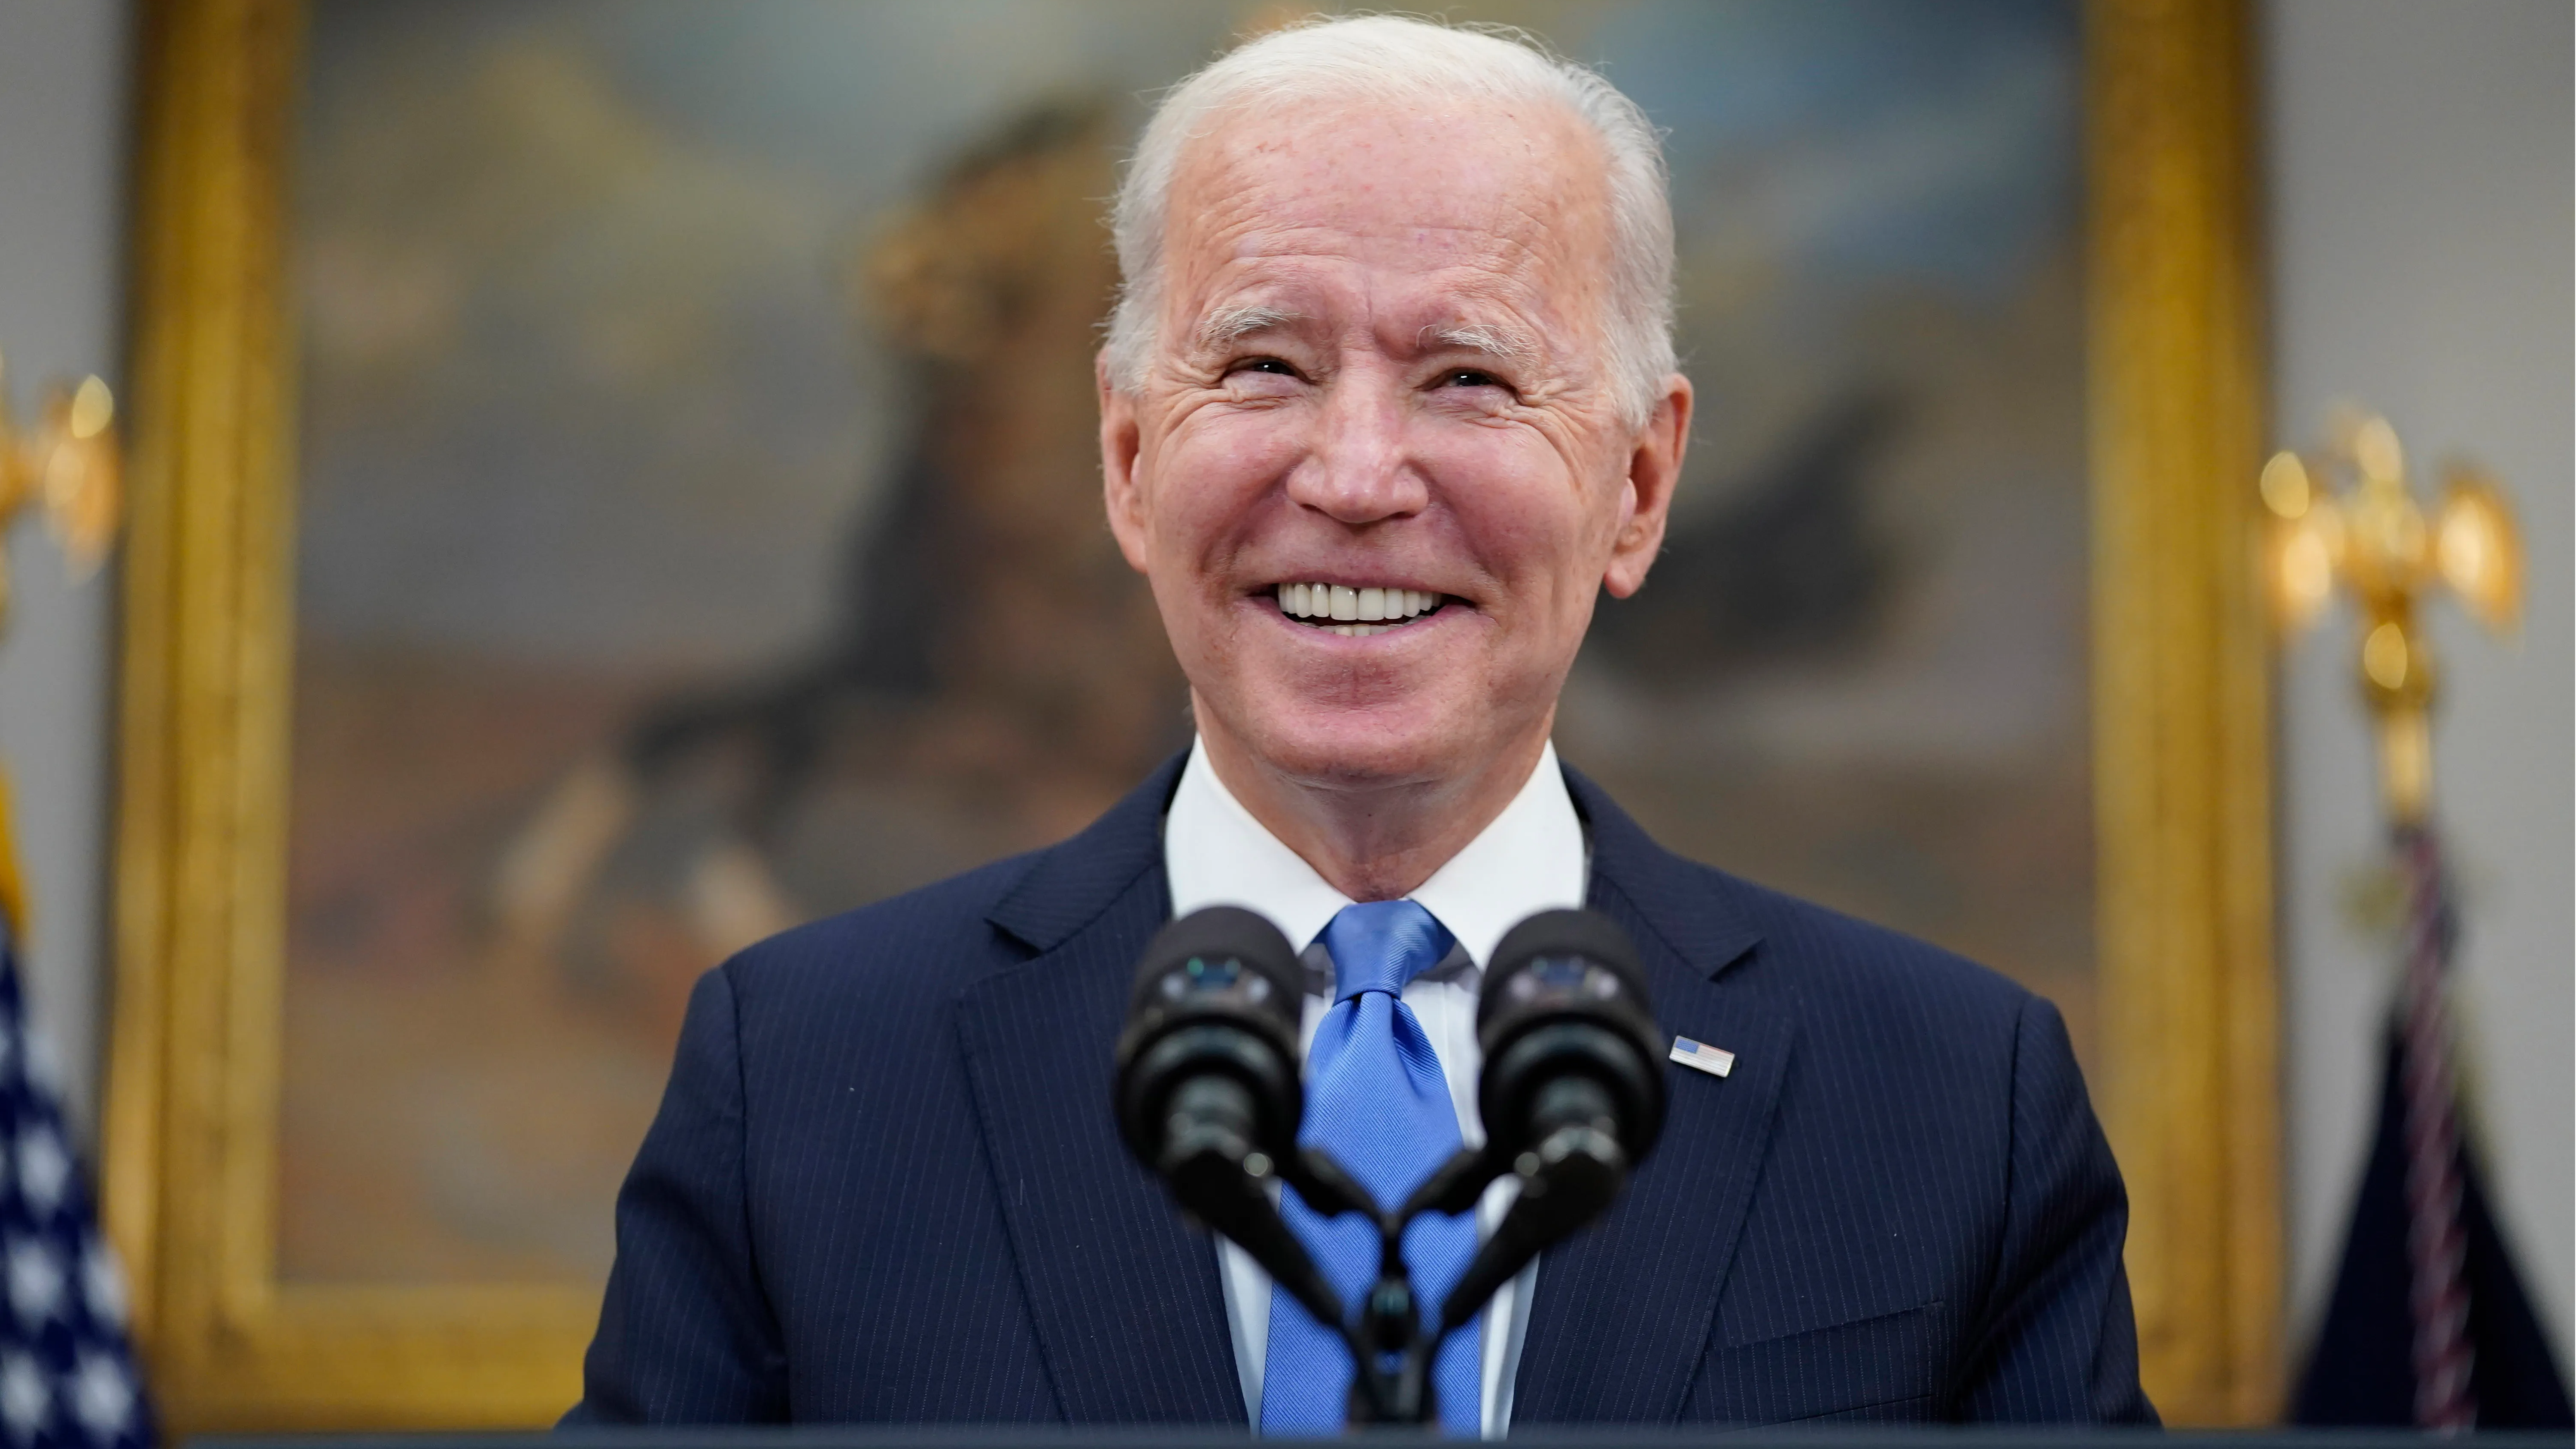 Joe Biden vows to help rebuild Gaza, insists on two-state solution